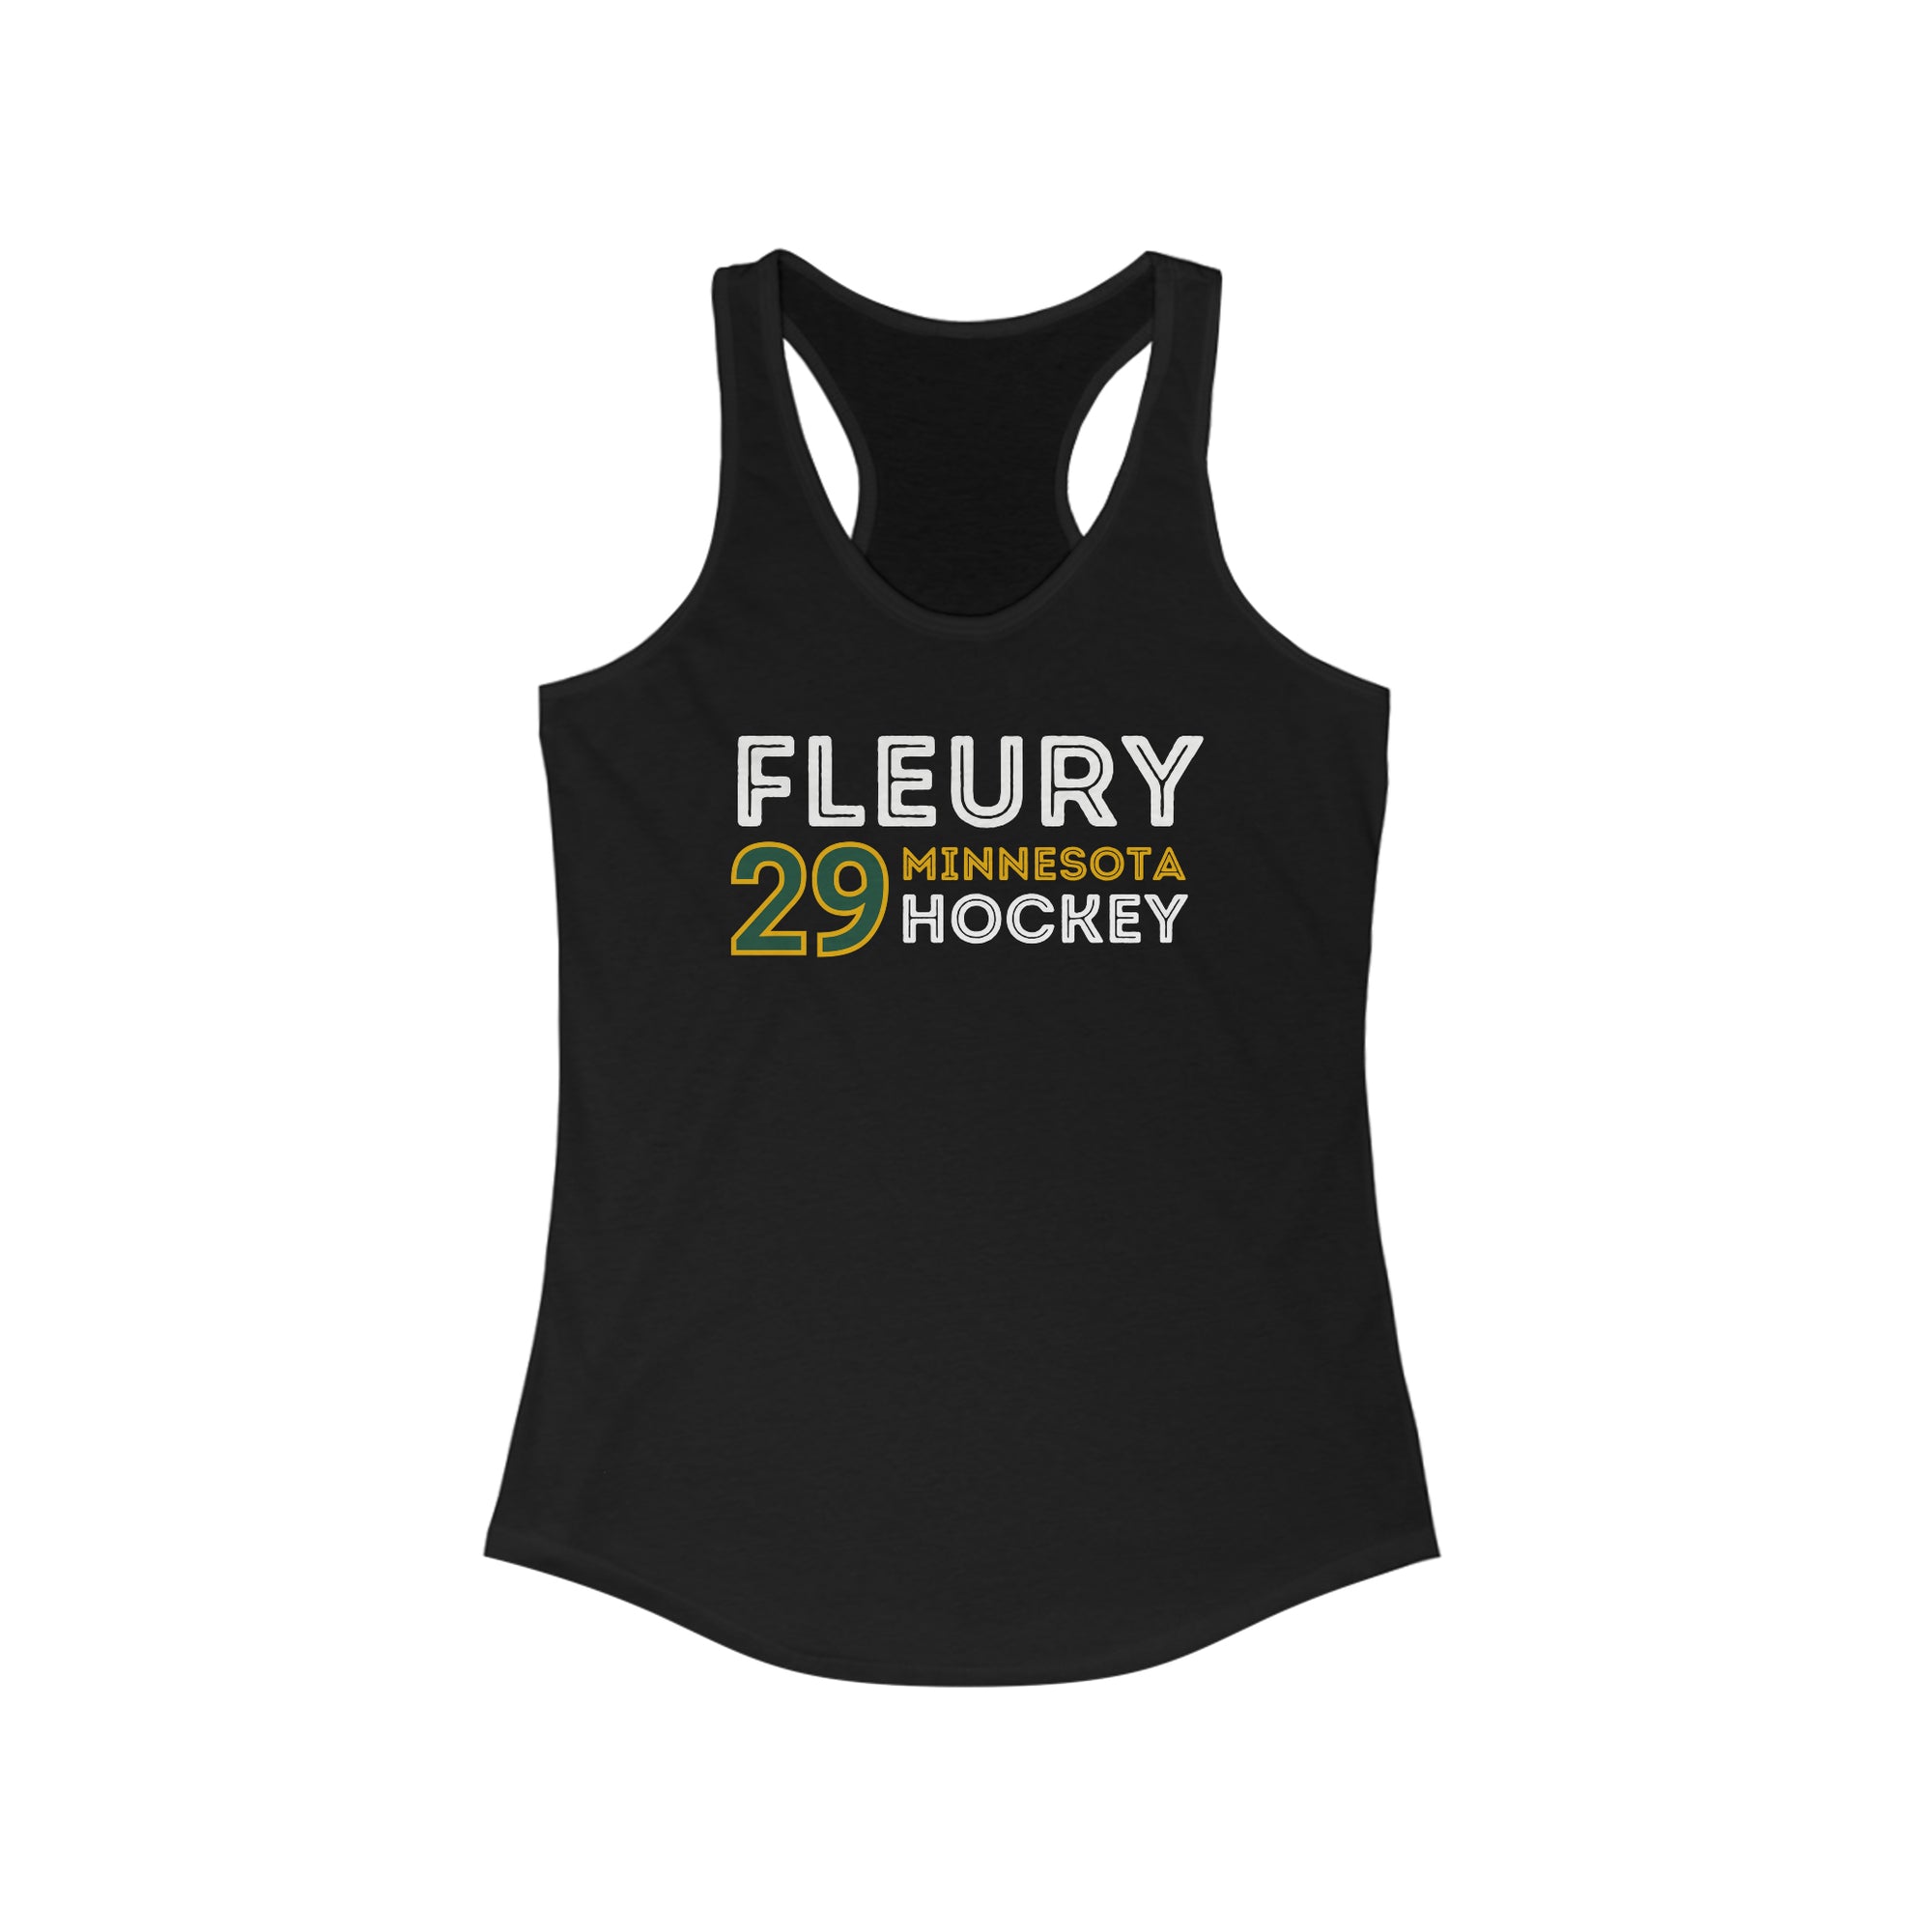 Fleury 29 Minnesota Hockey Grafitti Wall Design Women's Ideal Racerback Tank Top